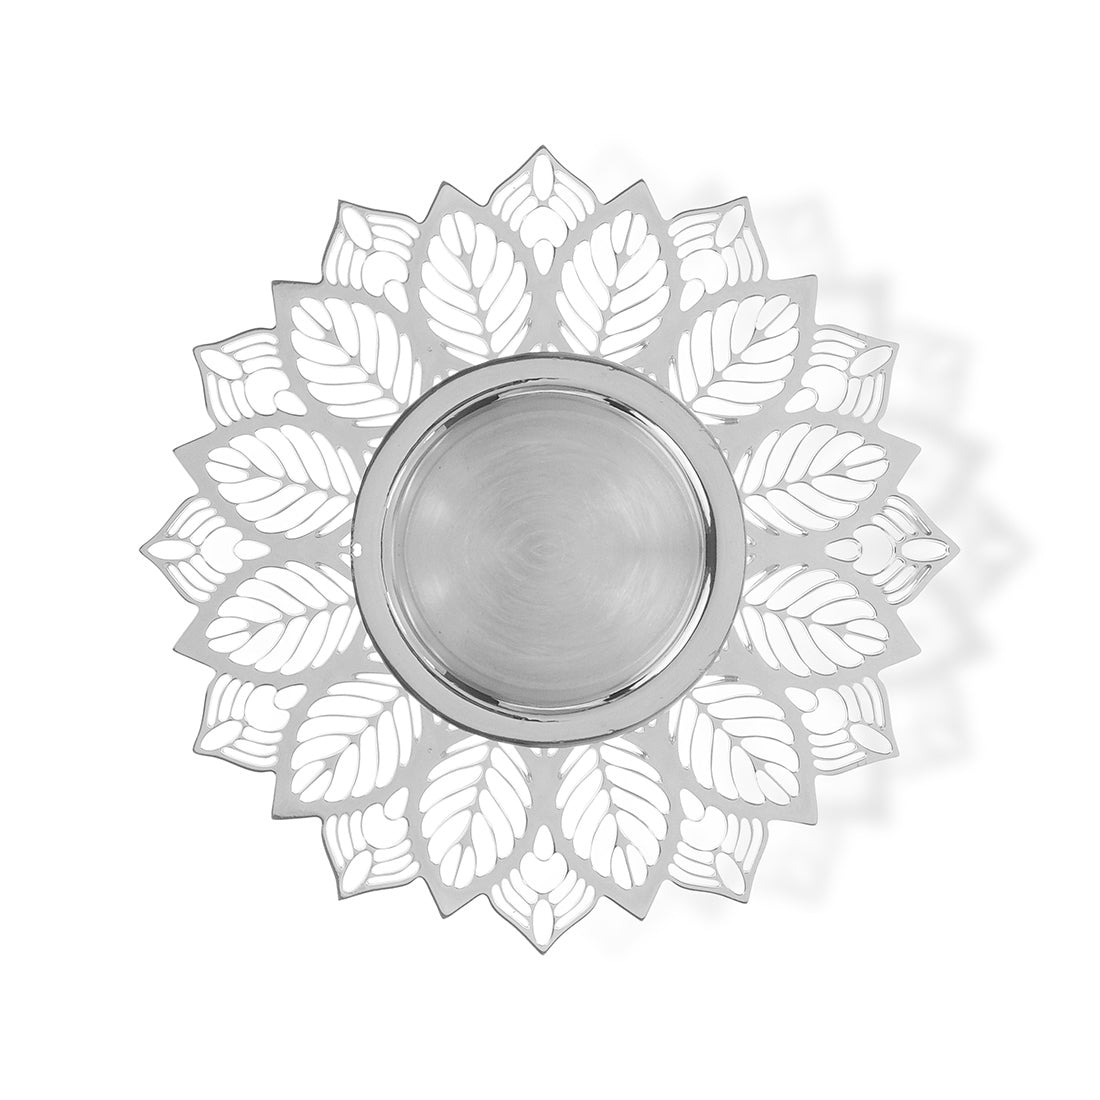 Silver Plated Tea Light (New Design)